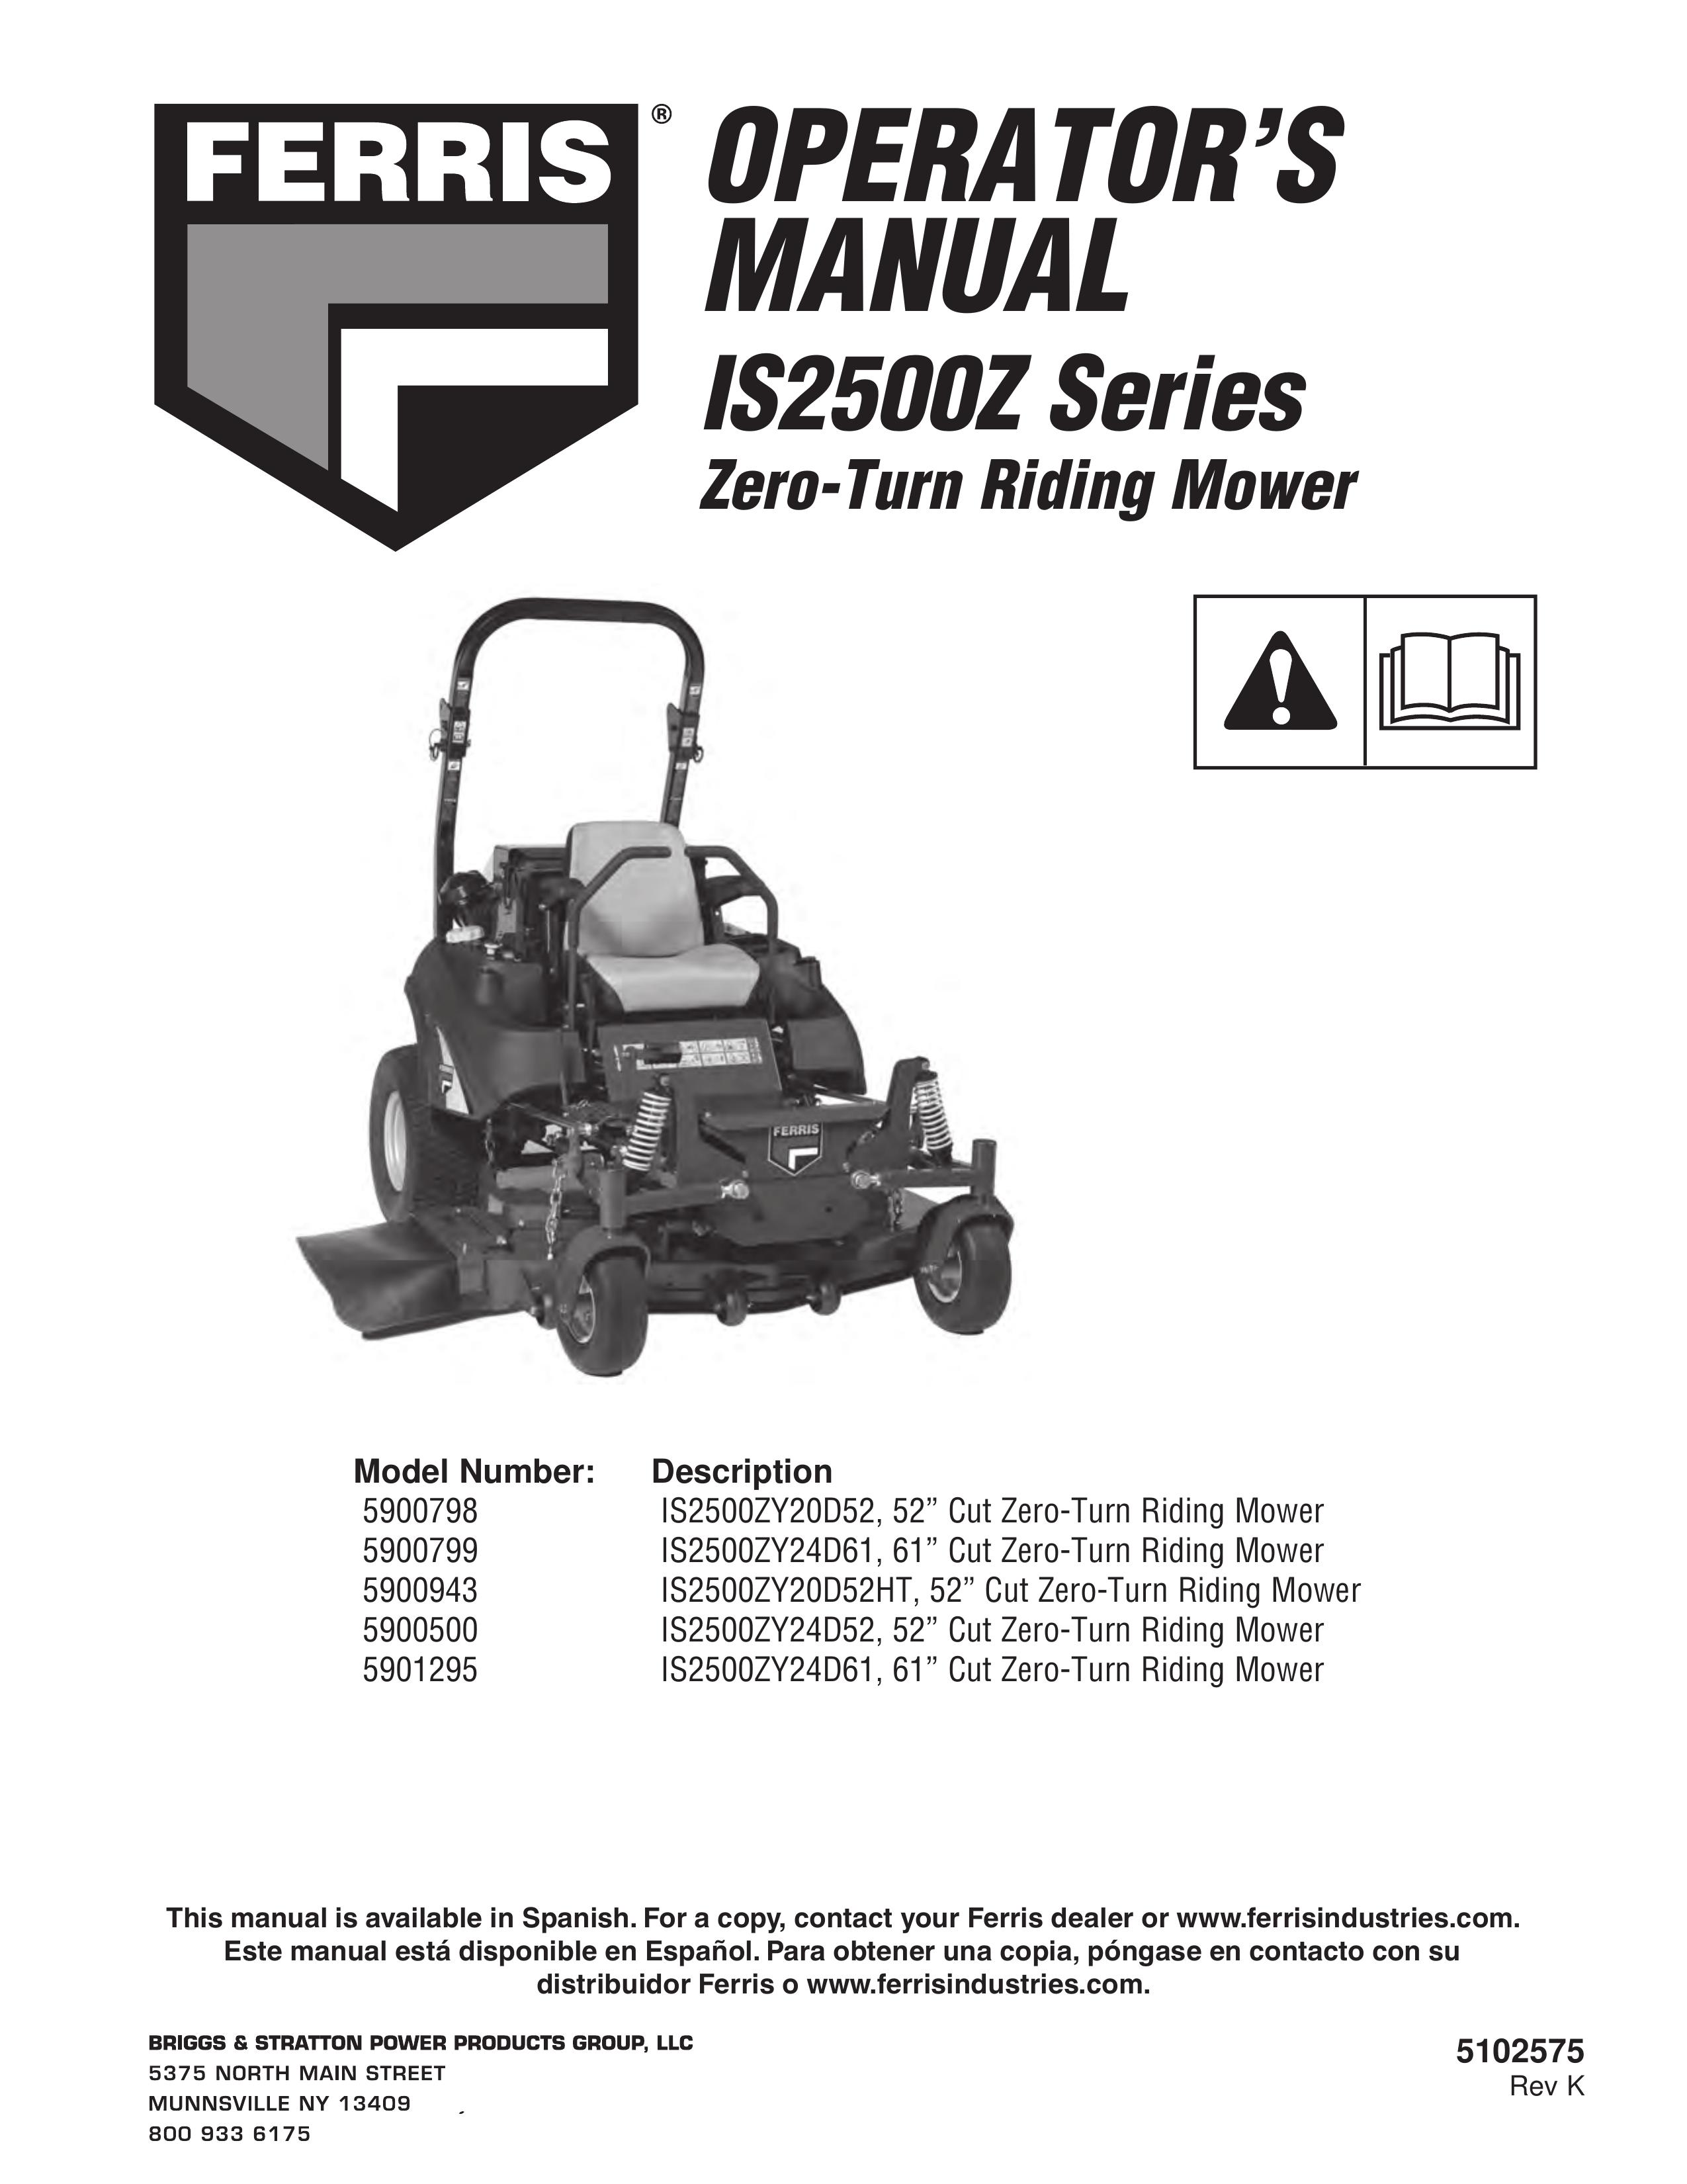 Ferris Industries 5900500 Lawn Mower User Manual